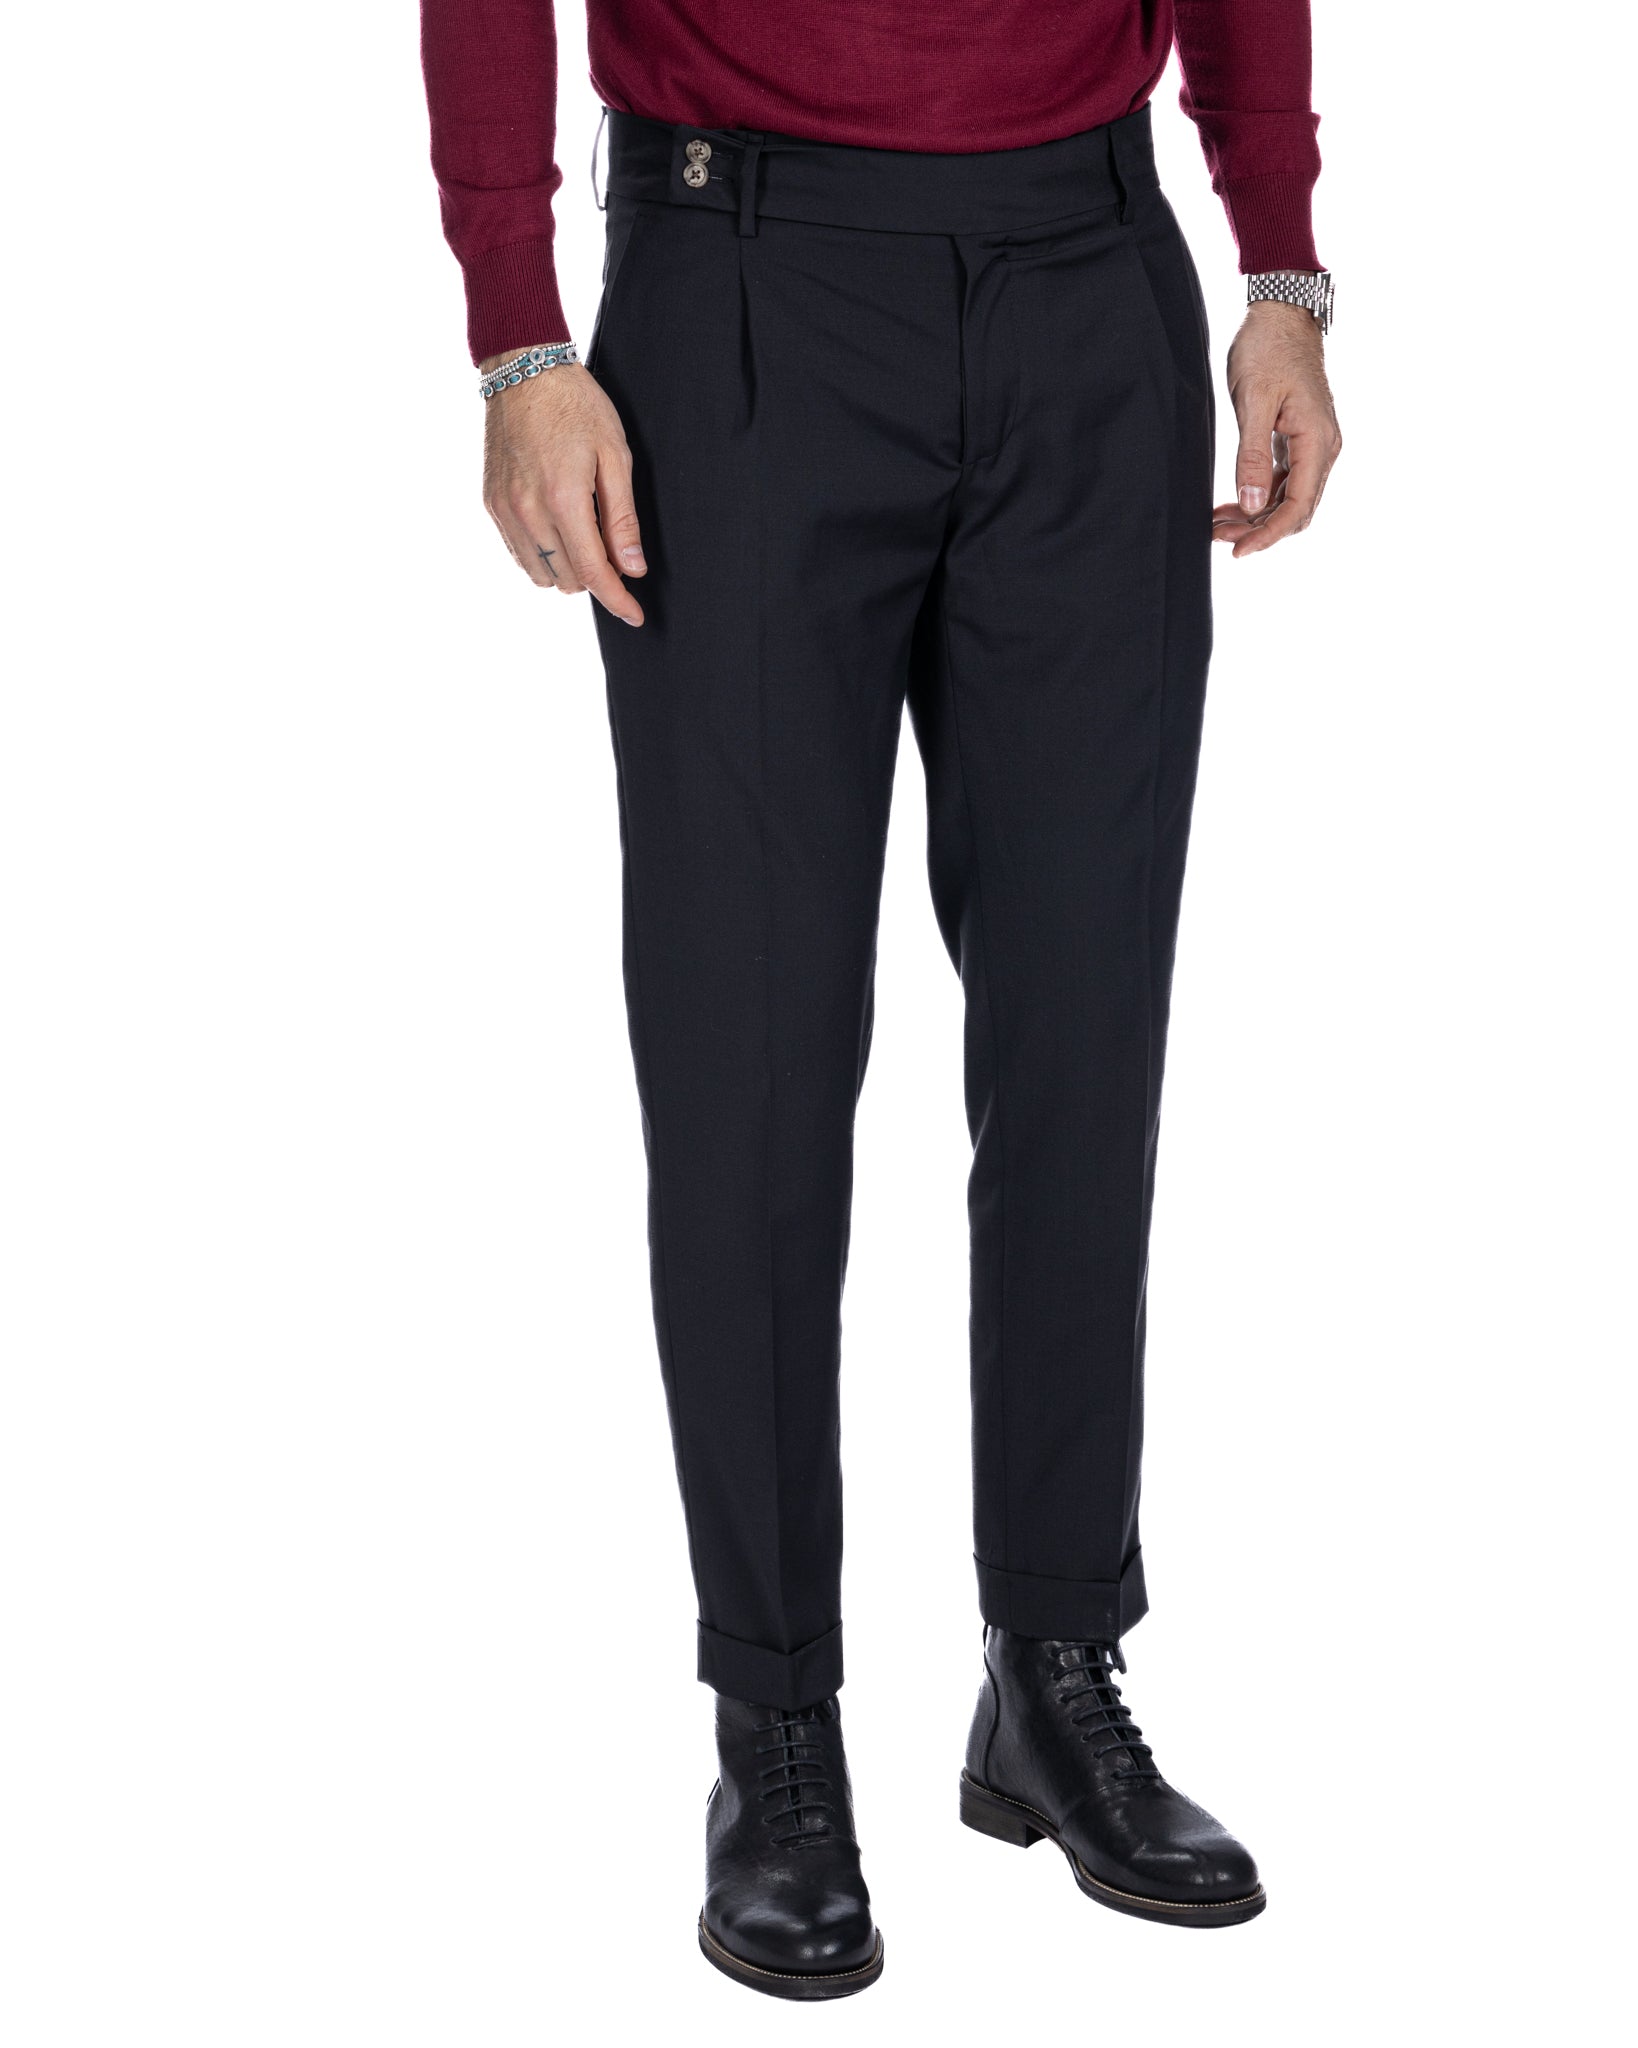 Italian - black high-waisted trousers in wool blend